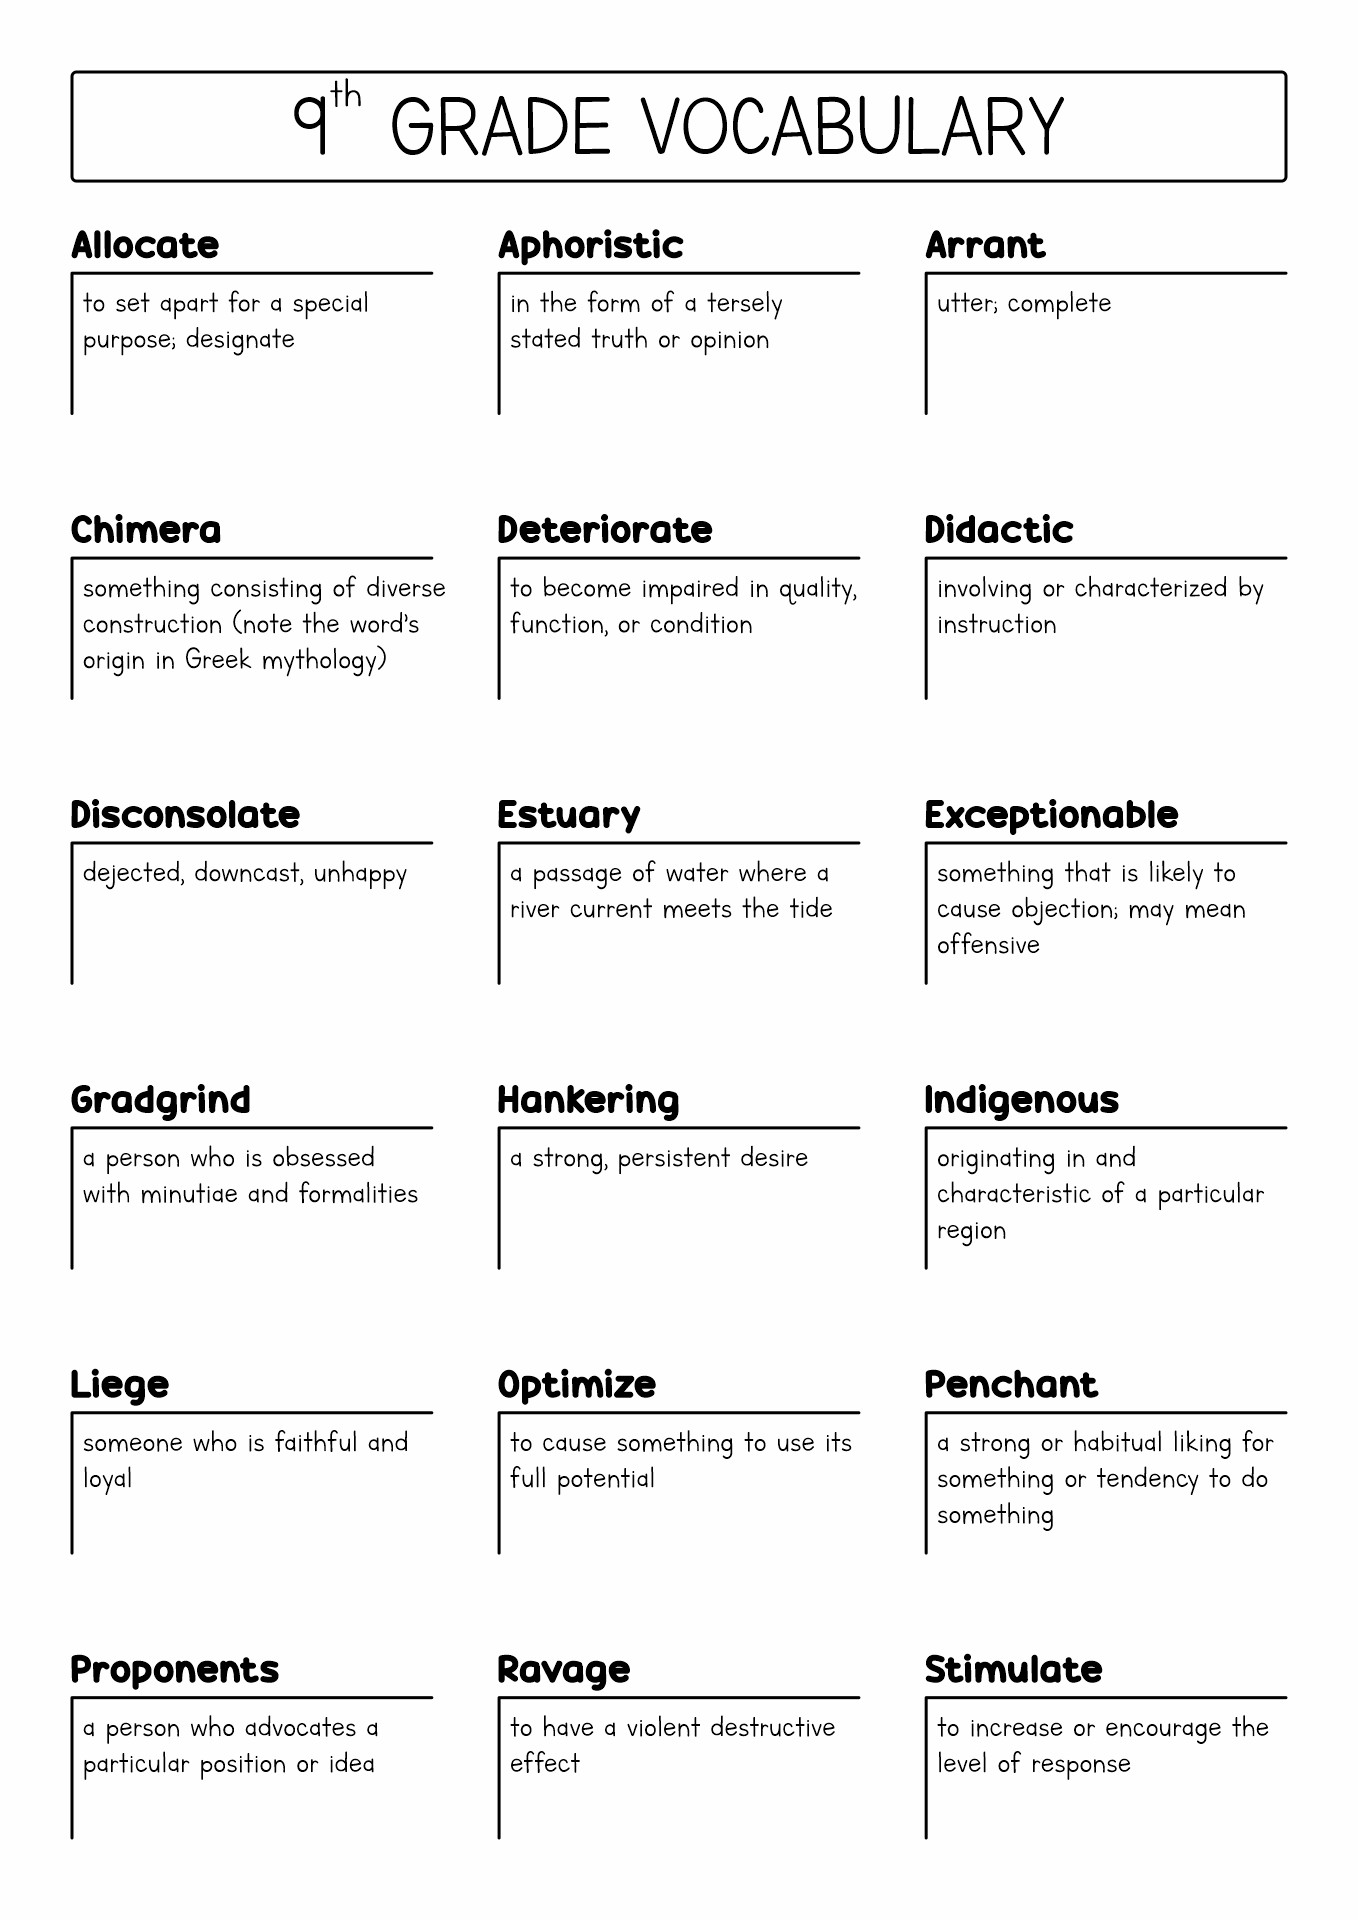 9th Grade Vocabulary Word List Image